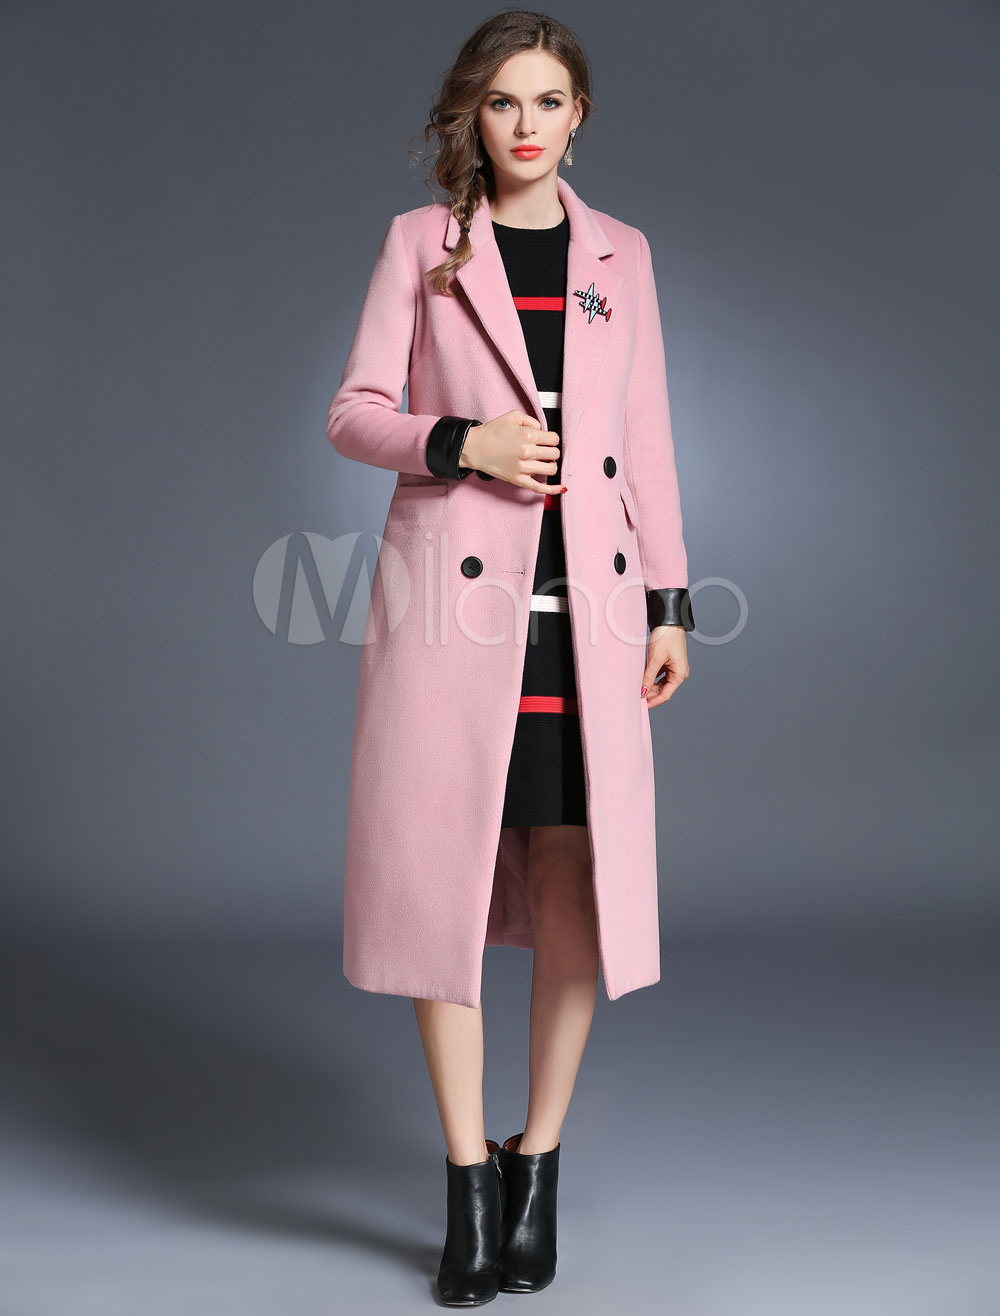 Wool Pea Coat Pink Women's Double Breasted Slim Fit Long Coat - Milanoo.com